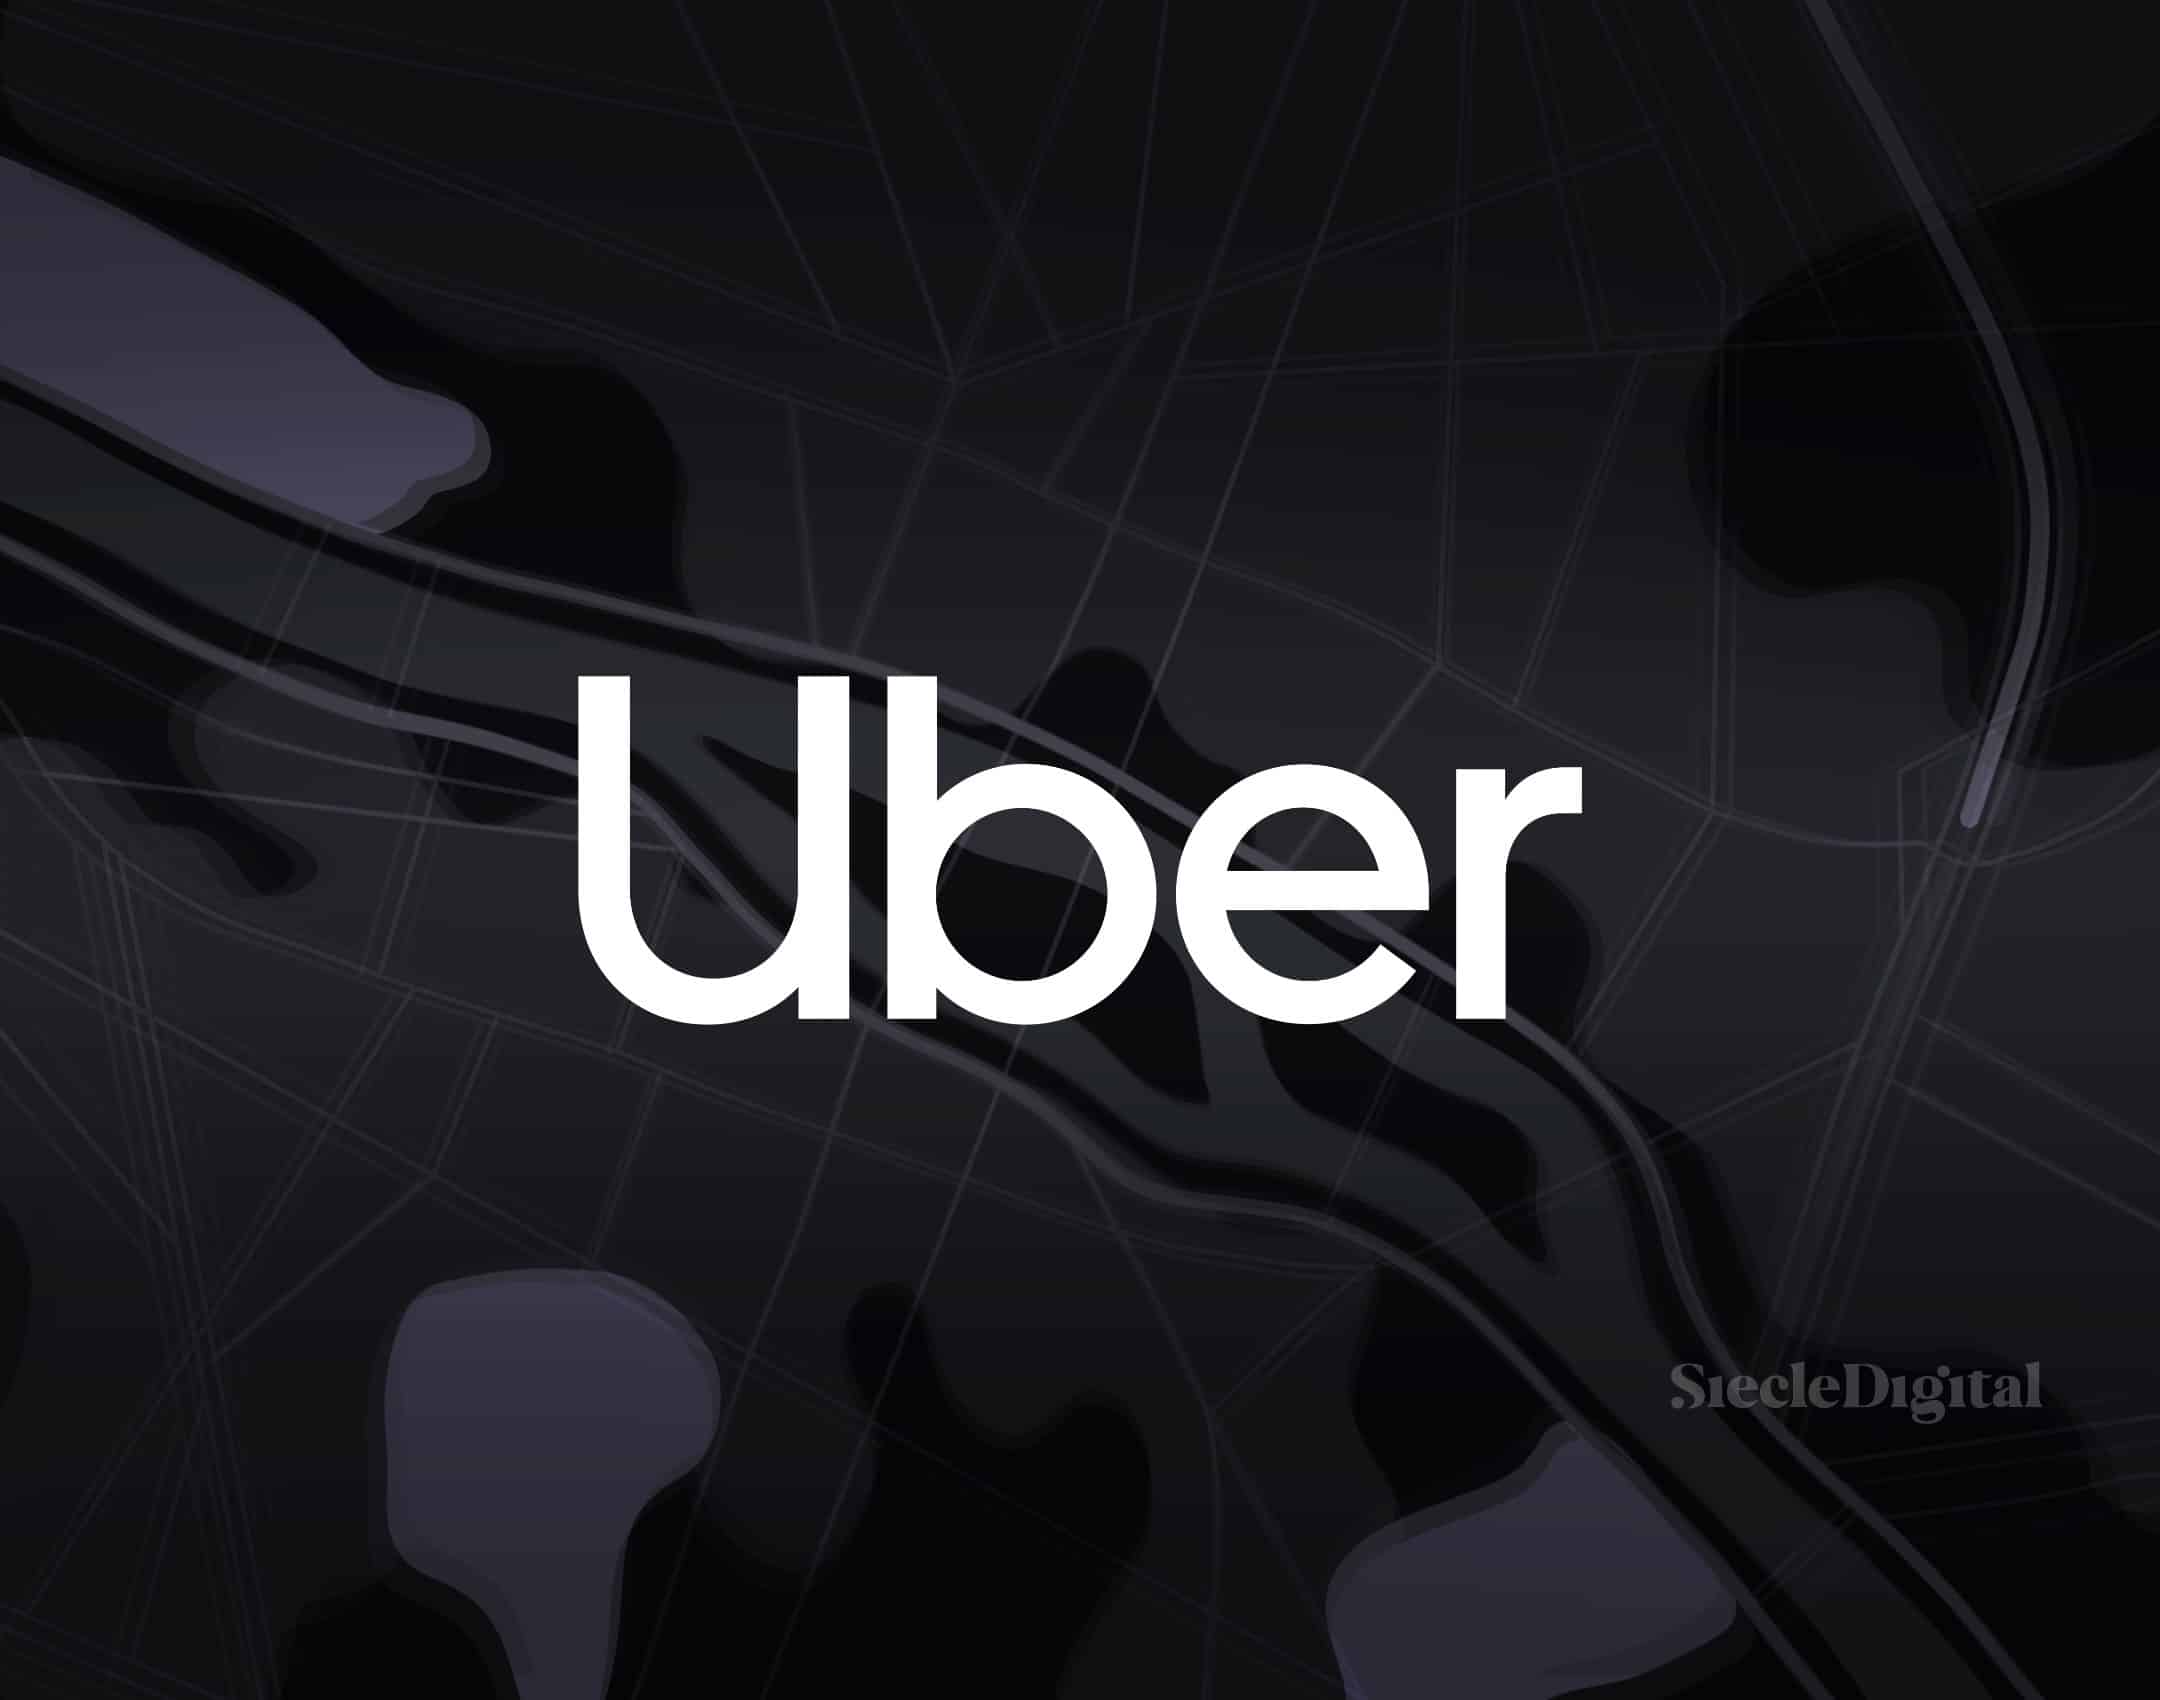 illustration du logo Uber